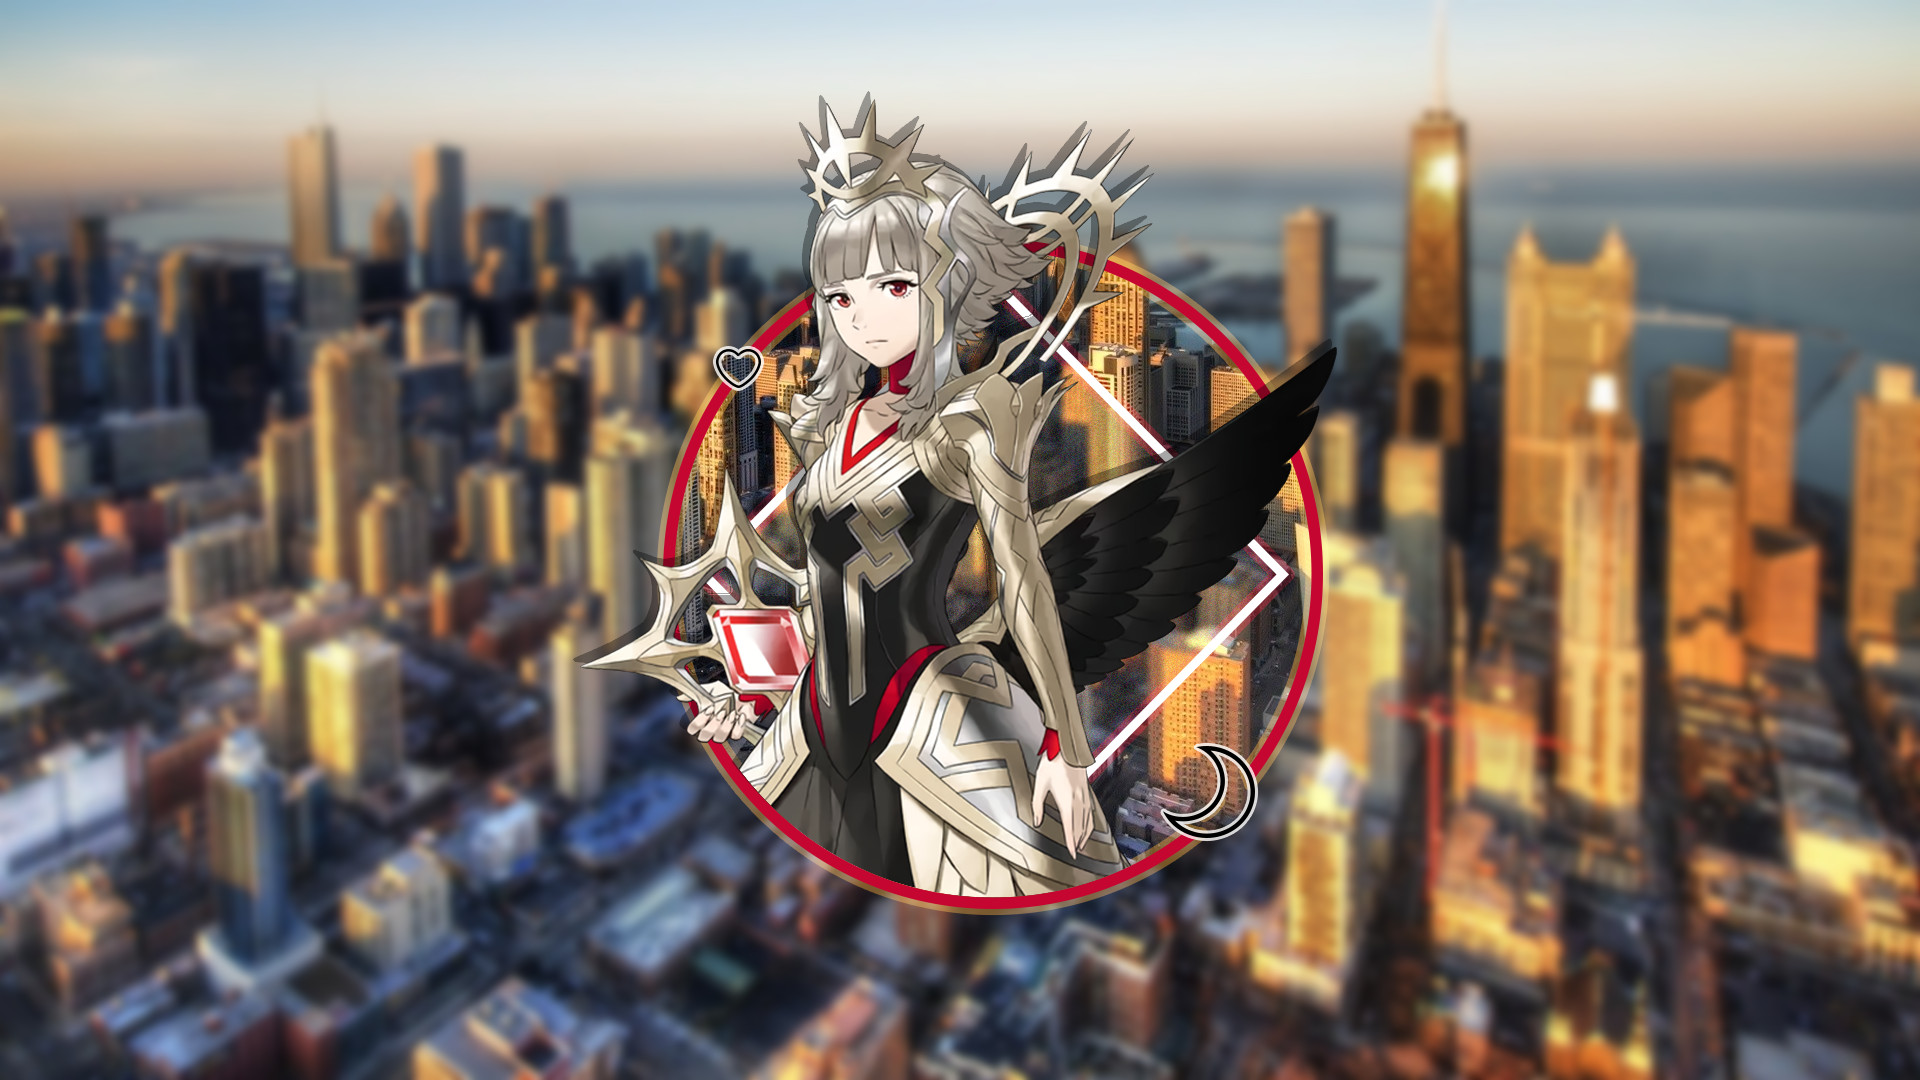 Anime 1920x1080 picture-in-picture anime girls Fire Emblem urban New York City skyscraper sunrise cityscape city